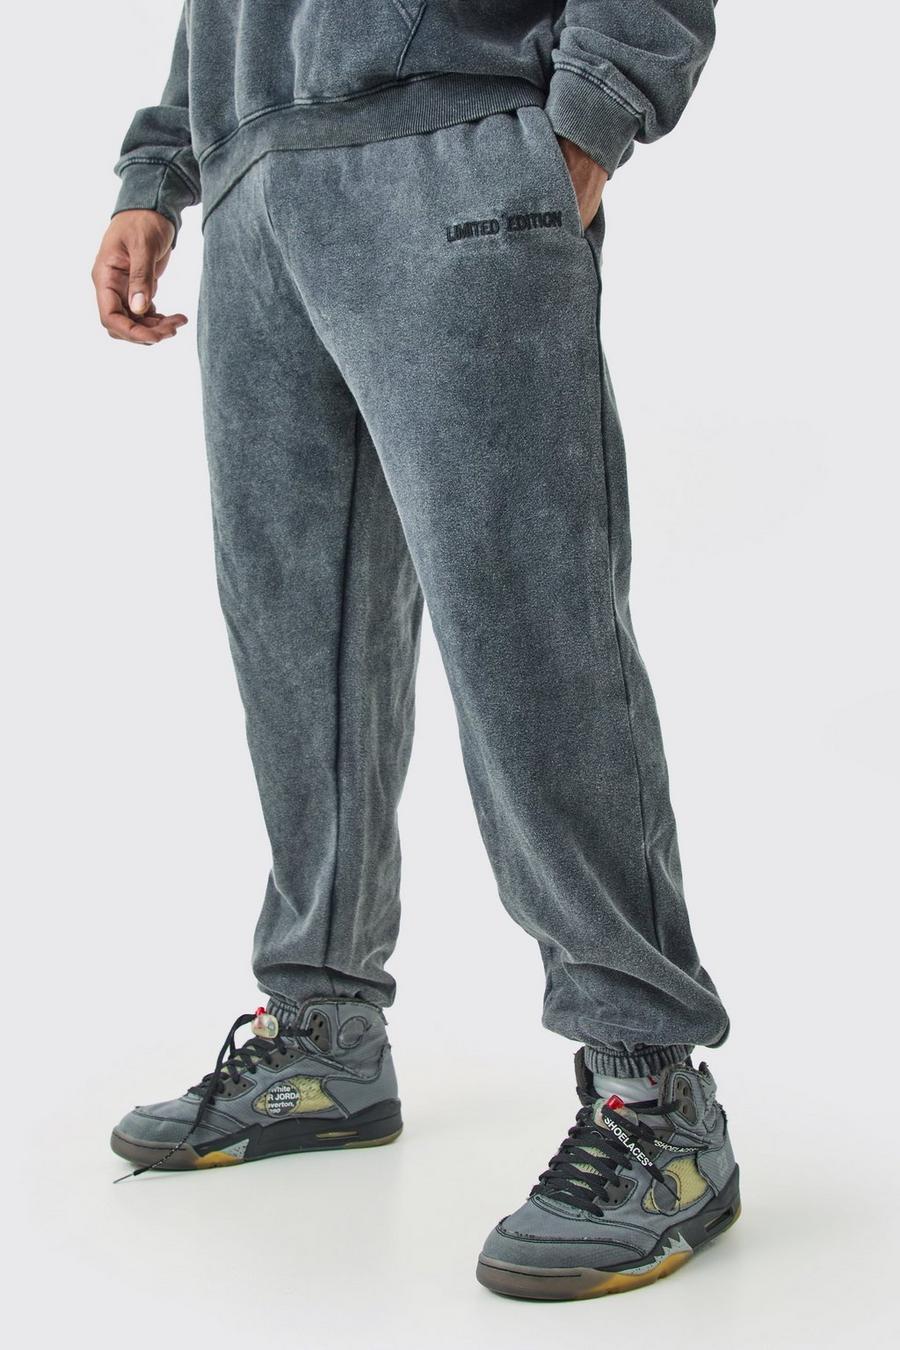 Men's Plus Size Sweatpants, Extra Large Sizes Up to 4XL